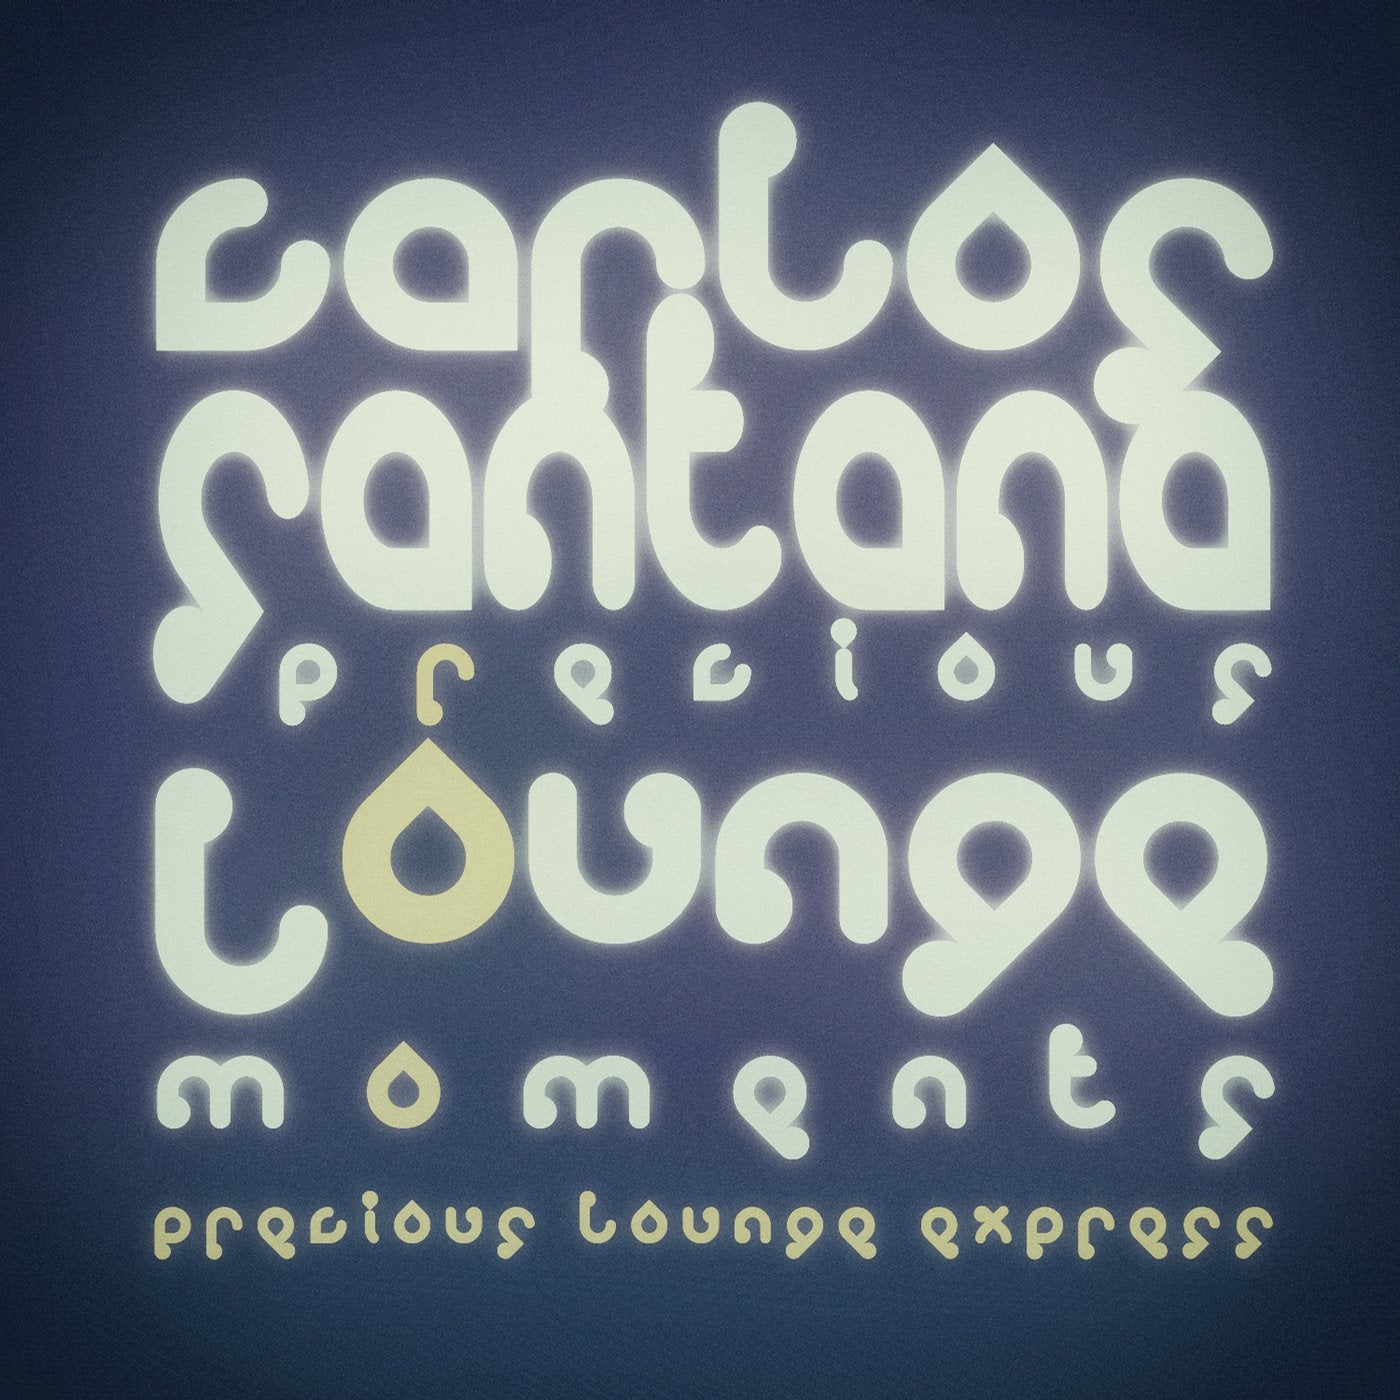 Precious Lounge Moments: Carlos Santana